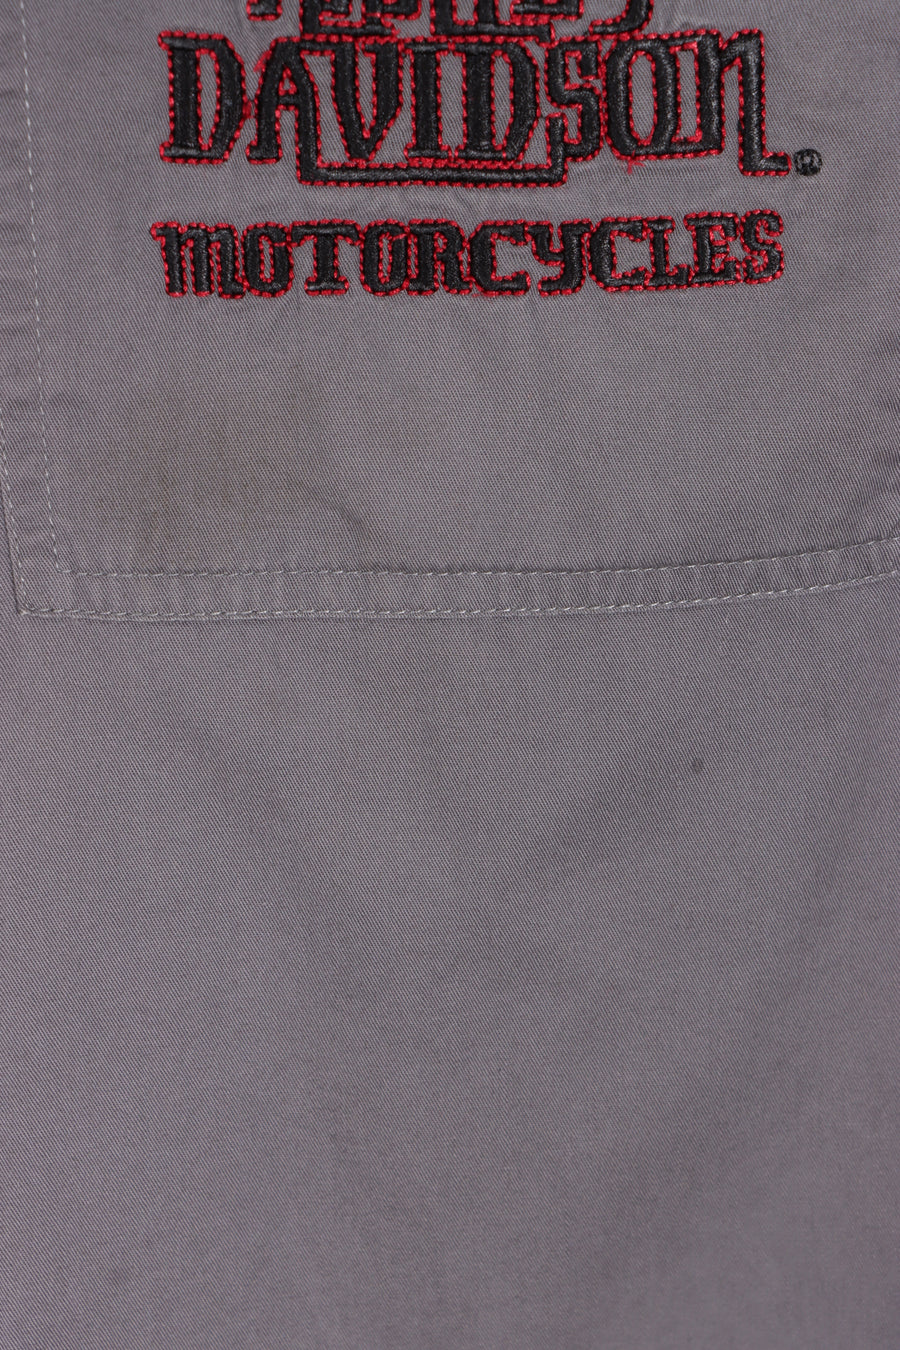 HARLEY DAVIDSON Multi Patch Mechanics Short Sleeve Shirt (XXL)